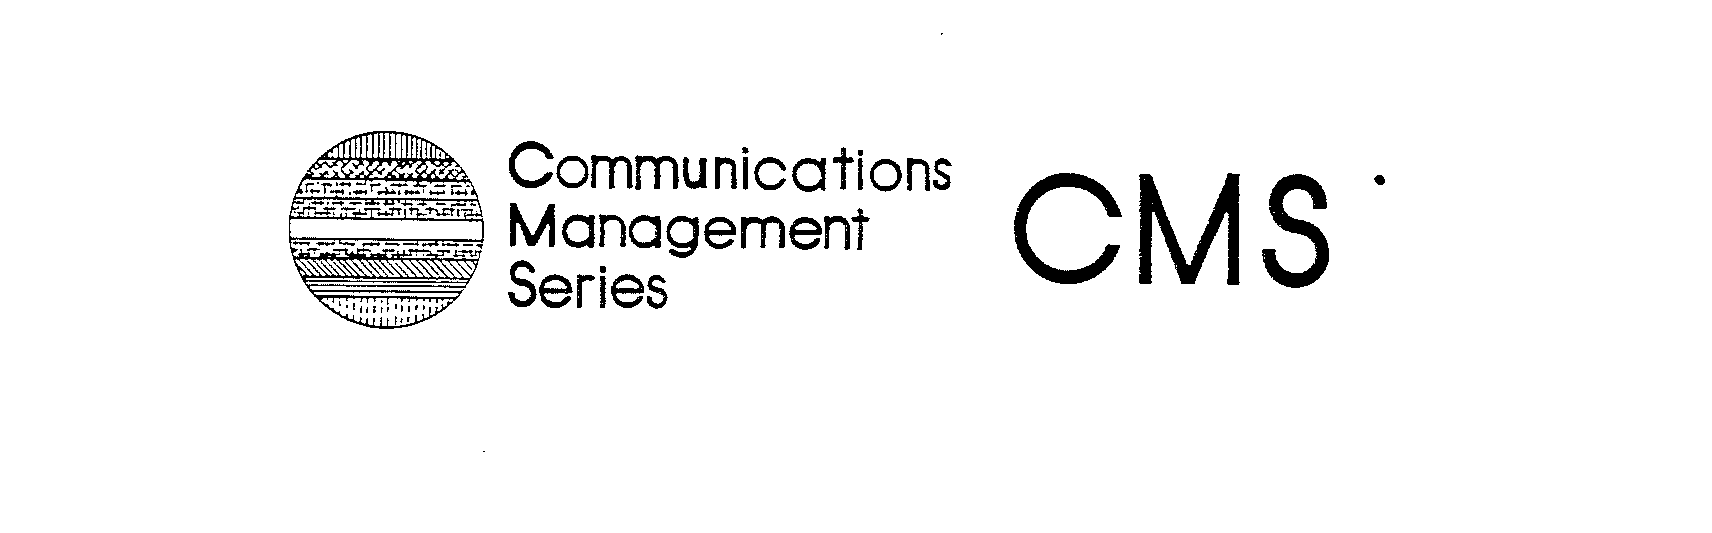  CMS COMMUNICATIONS MANAGEMENT SERIES